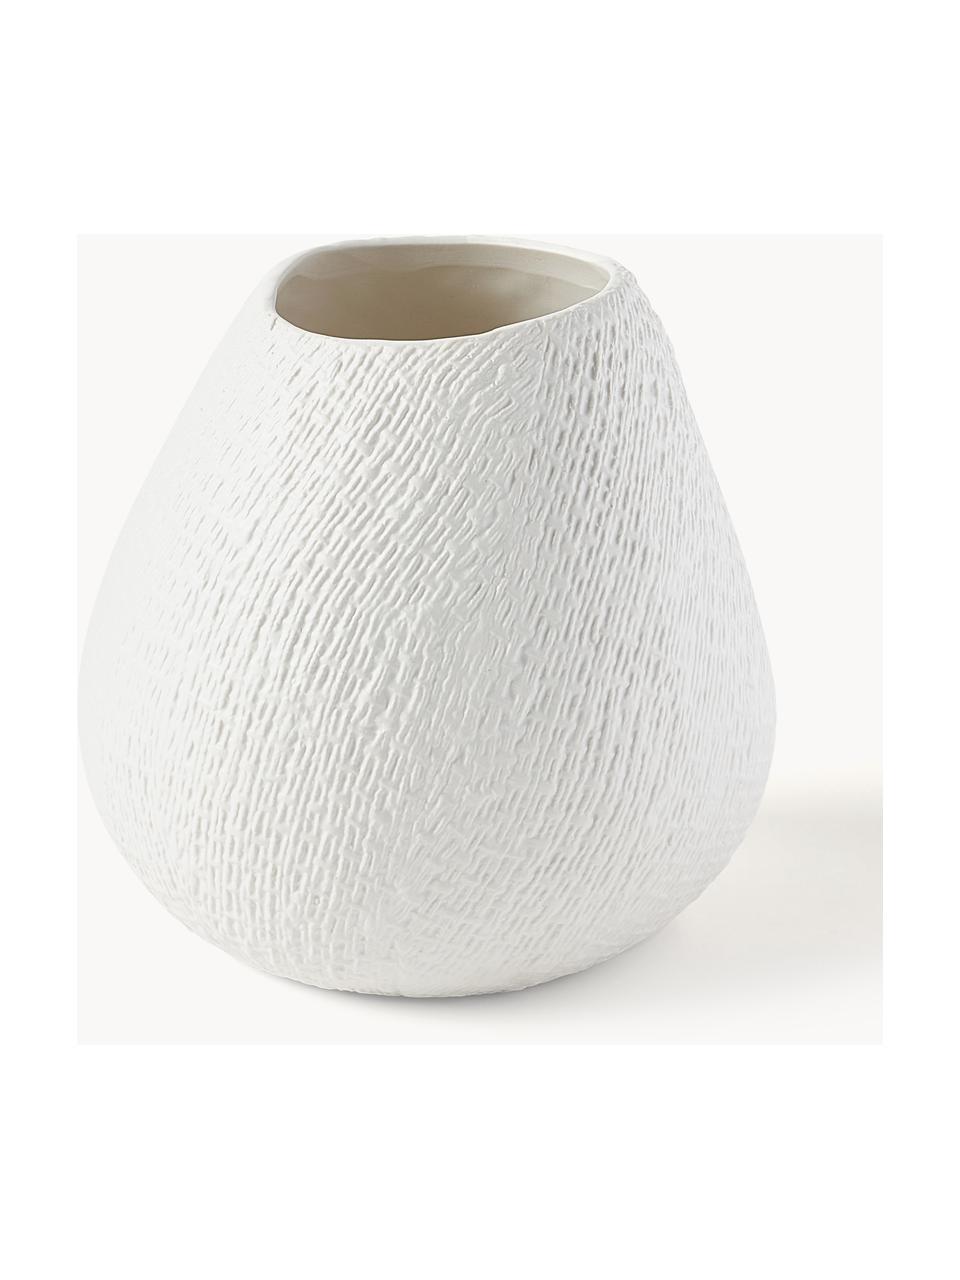 Handgefertigte Keramik-Vase Wendy, H 20 cm, Keramik, Cremeweiss, Ø 19 x H 20 cm